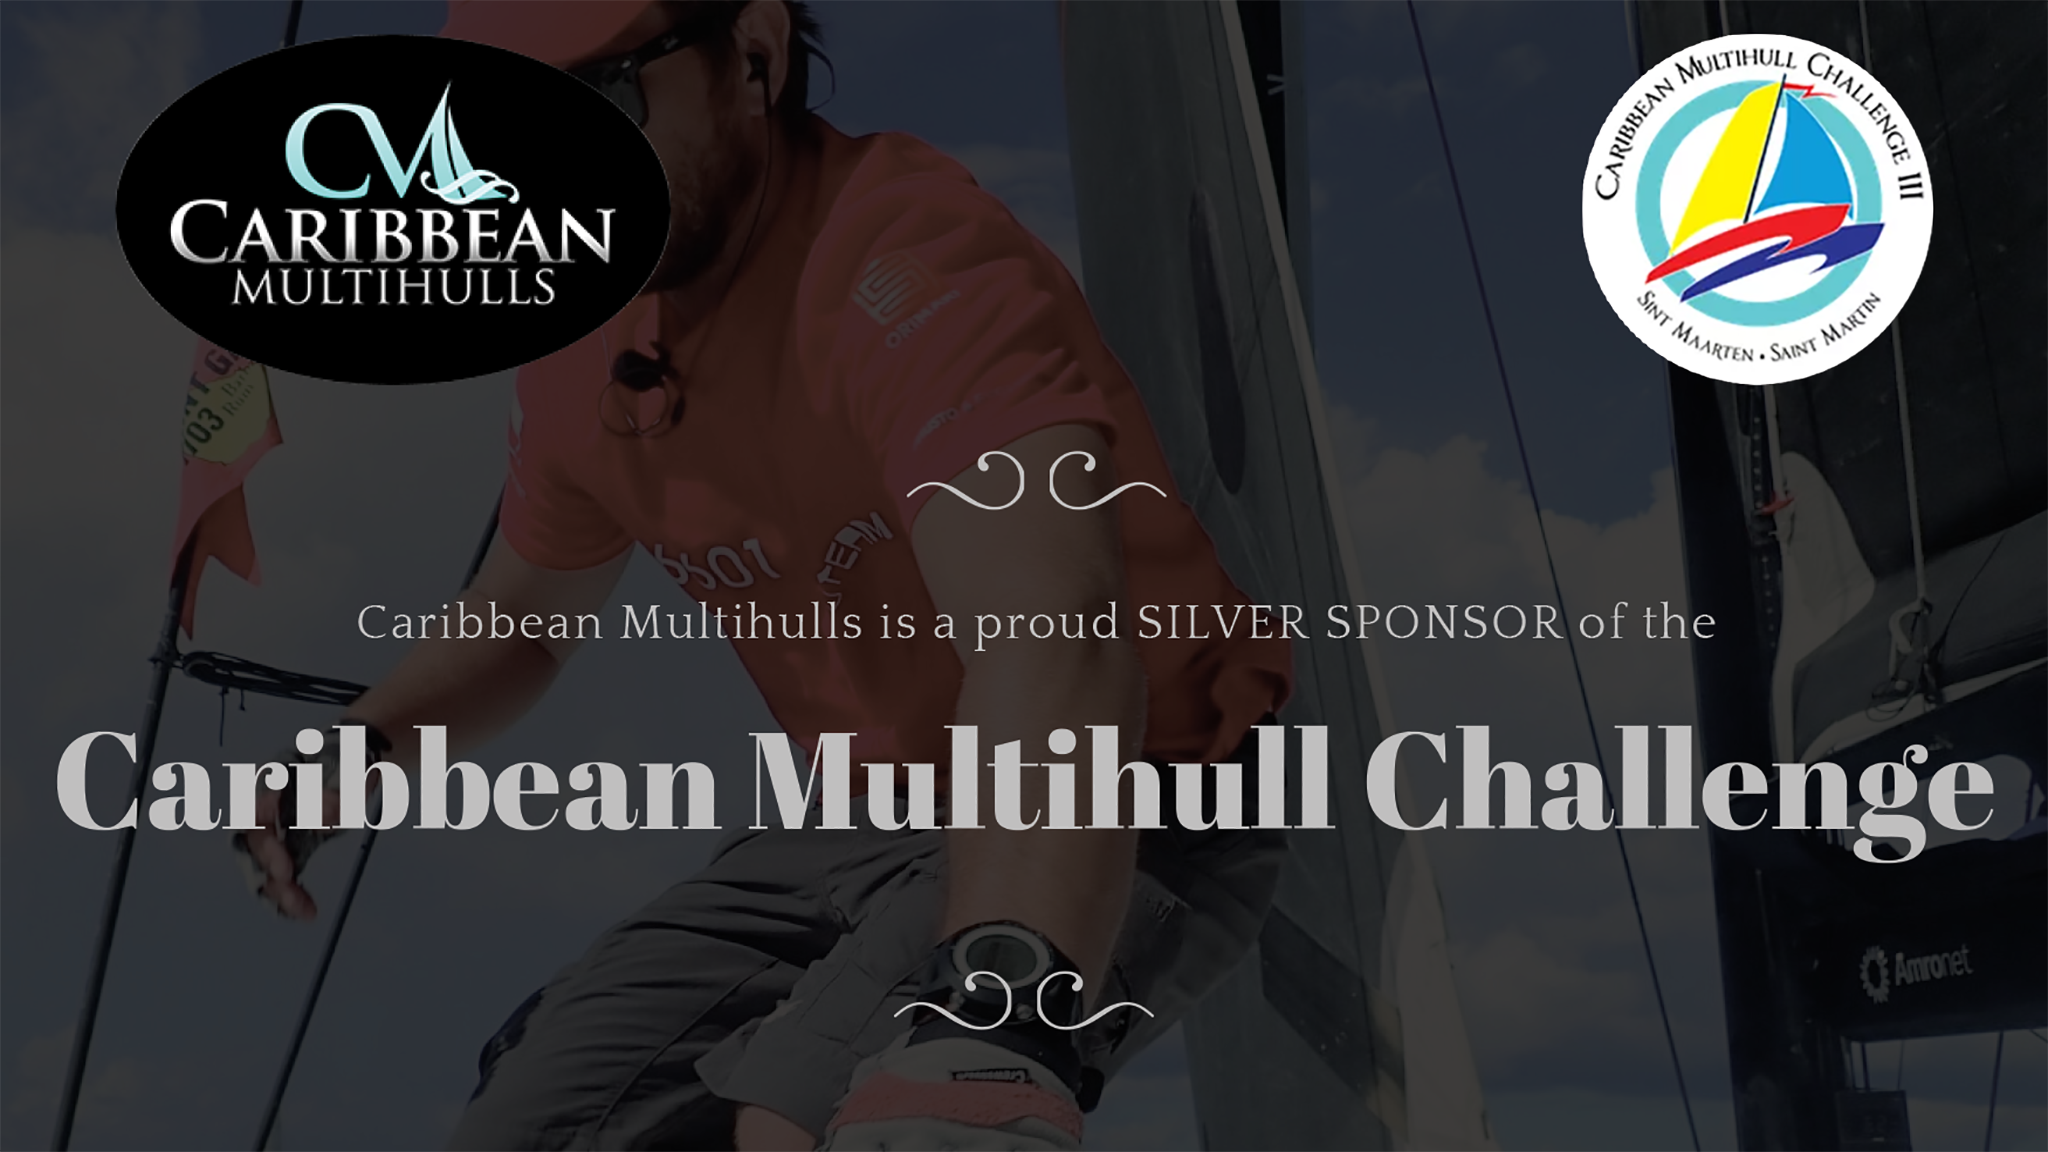 Caribbean Multihulls proud sponsor of the Caribbean Multihull Challenge